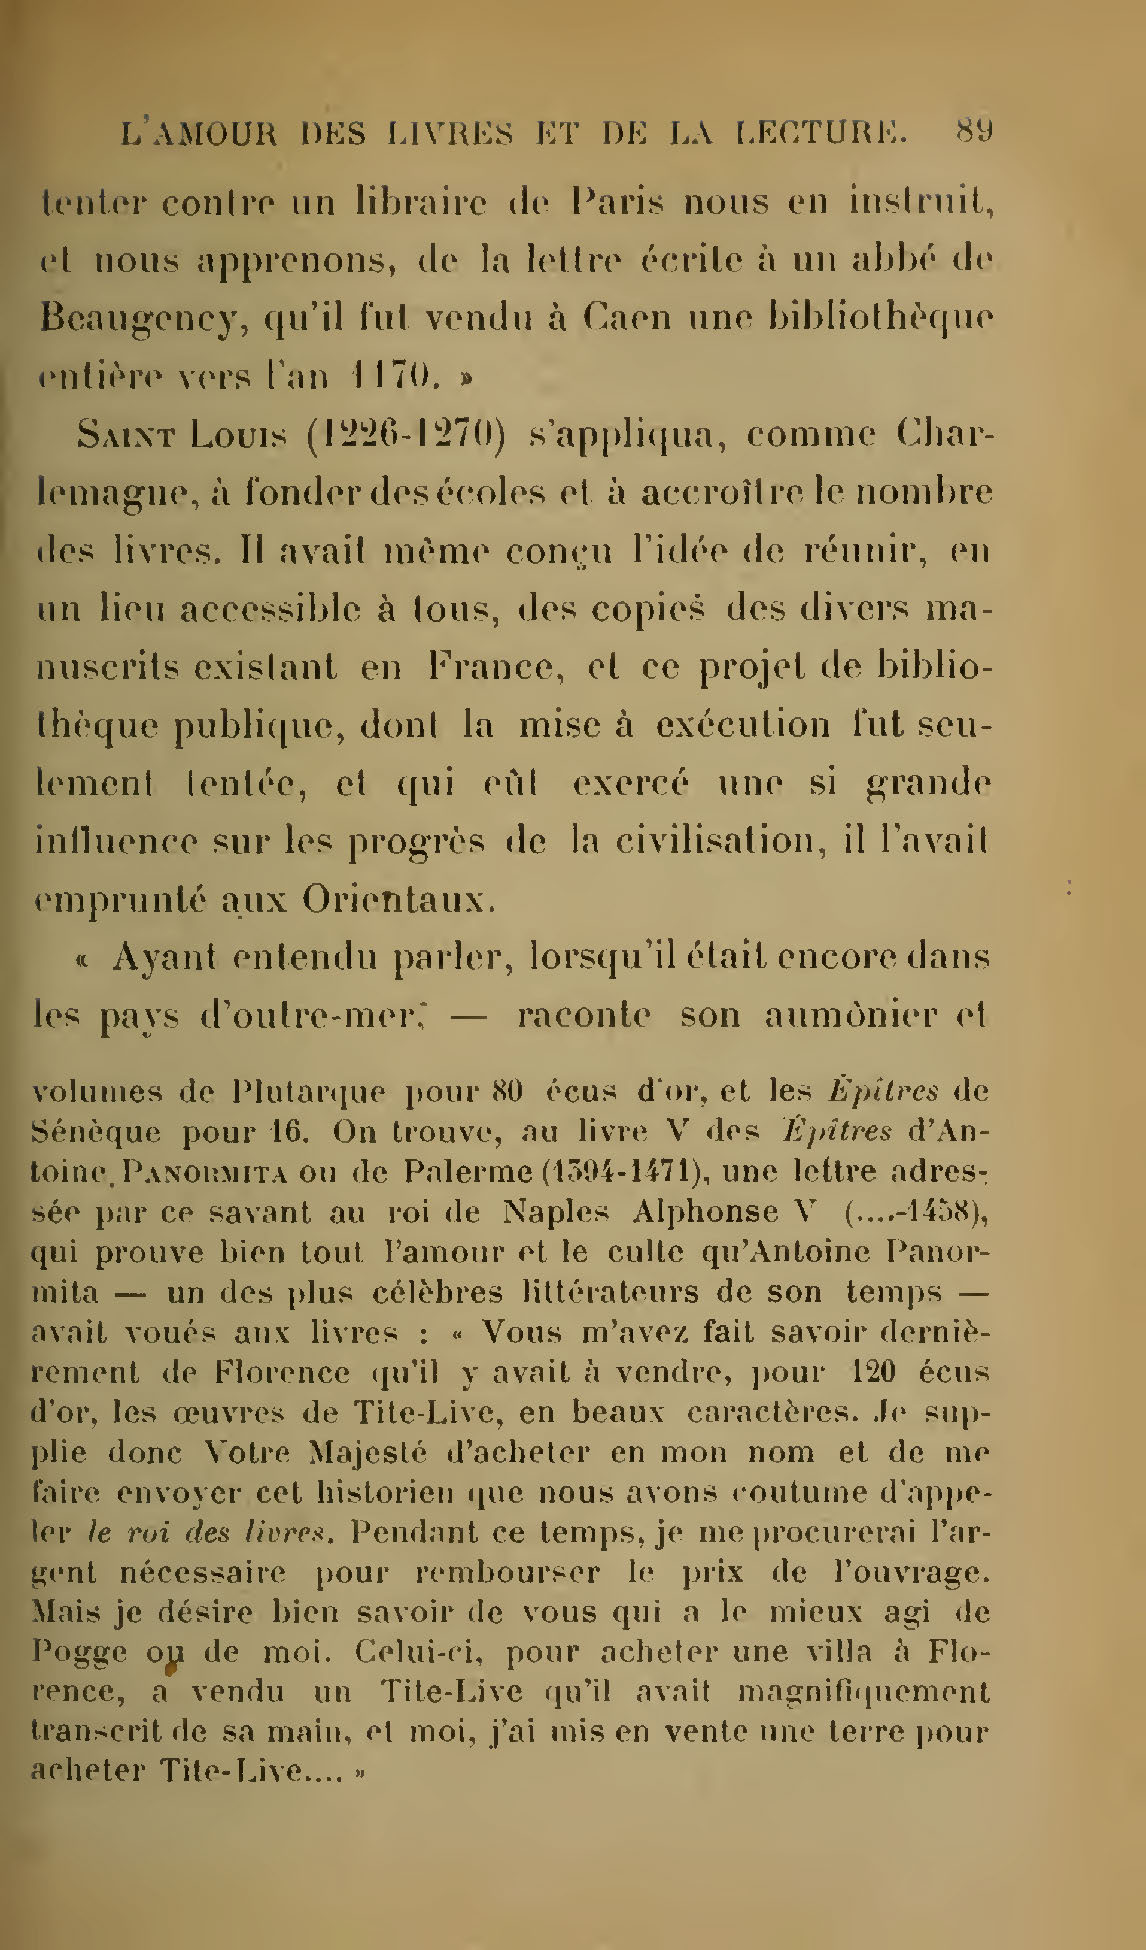 Albert Cim, Le Livre, t. I, p. 89.